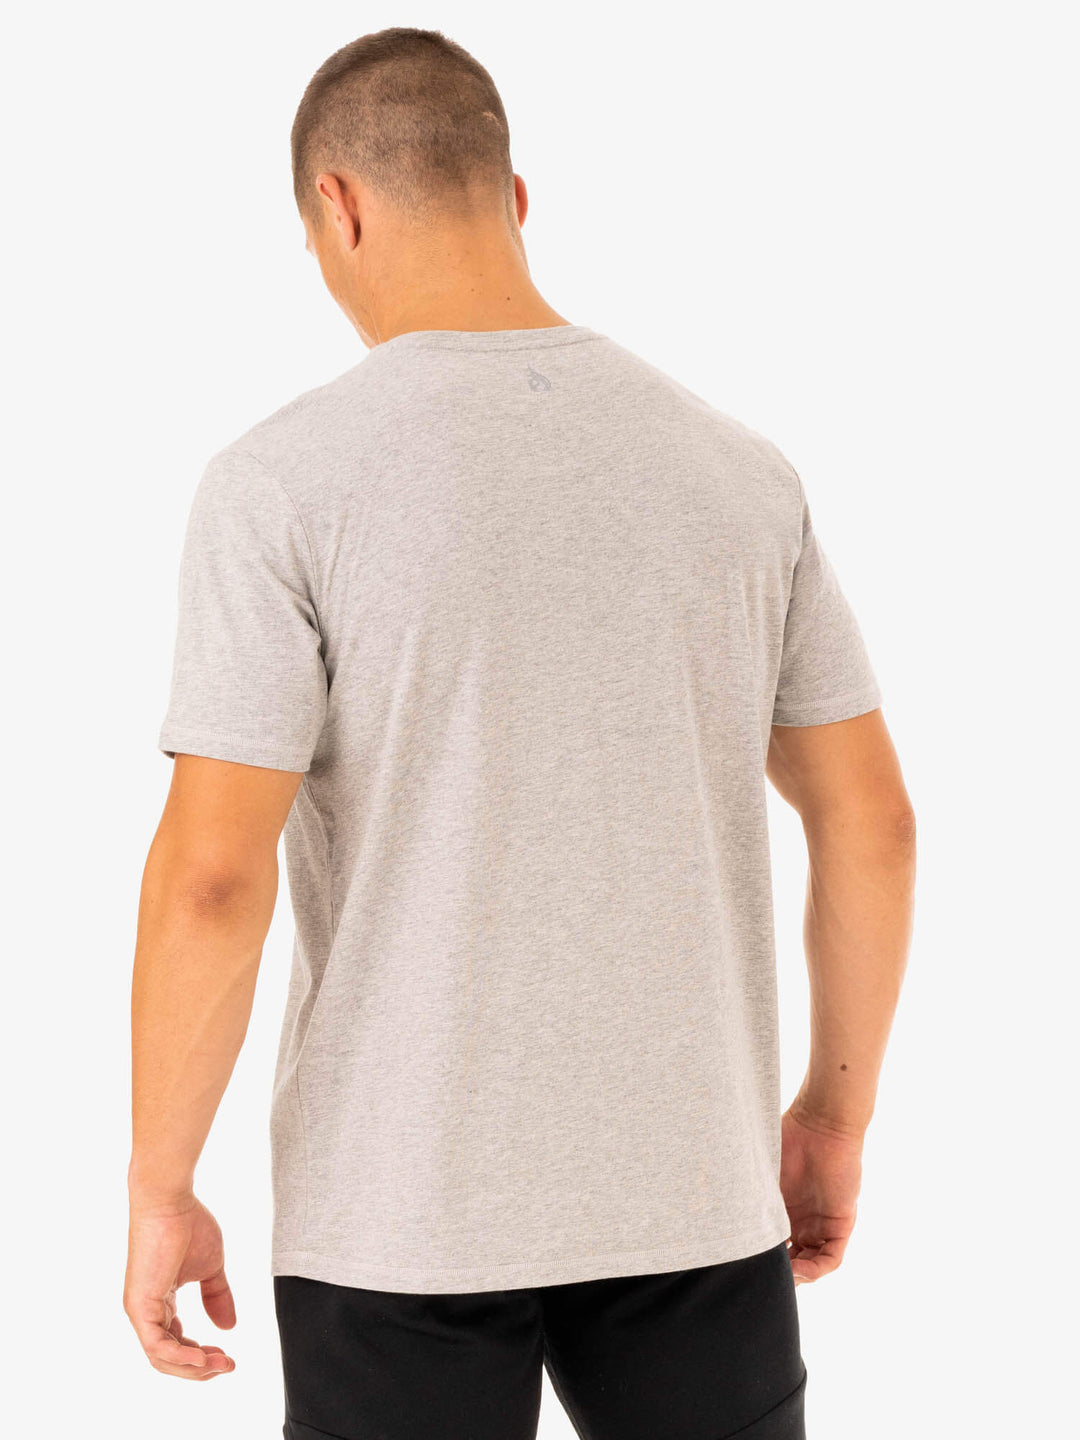 Limitless T-Shirt - Grey Marl Clothing Ryderwear 